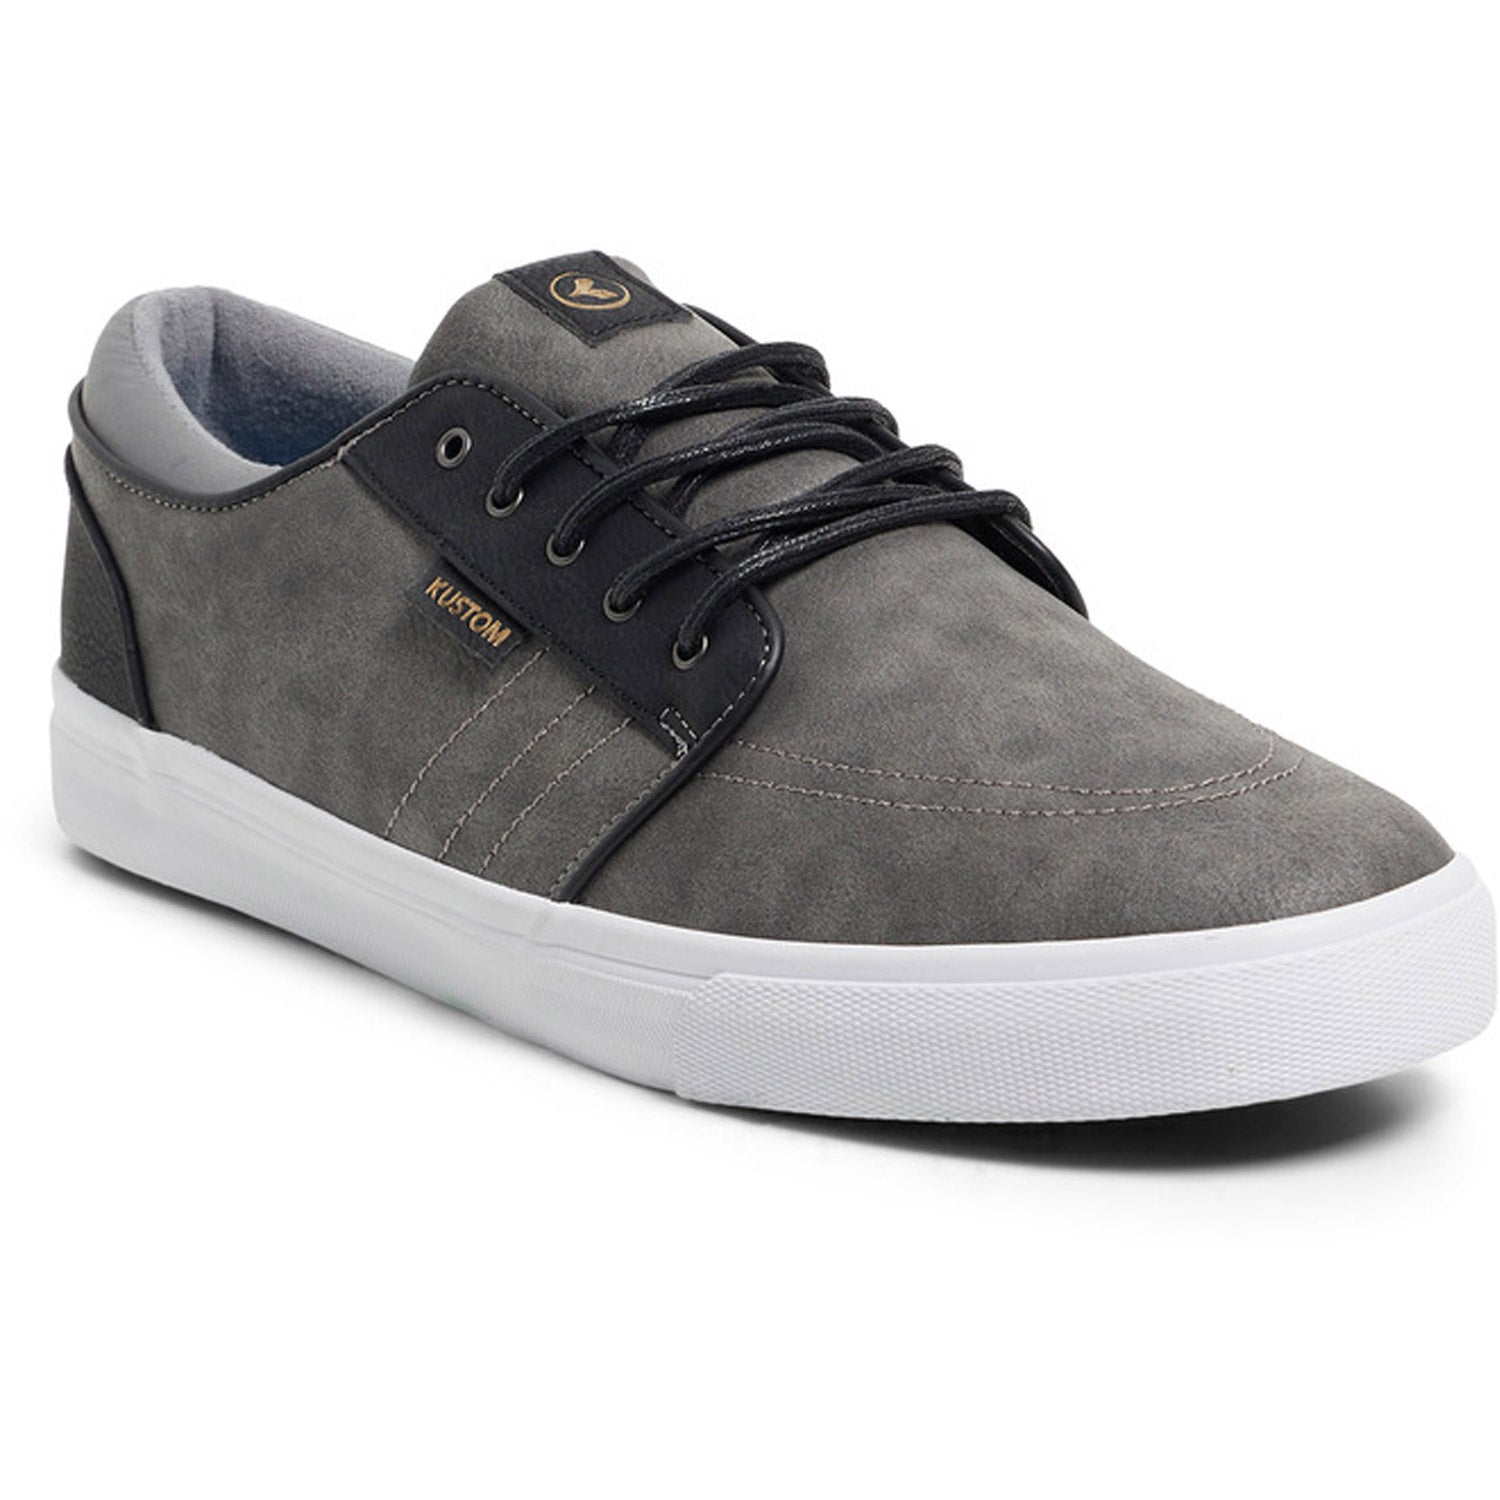 Remark 2 Mens Shoes - Grey Black